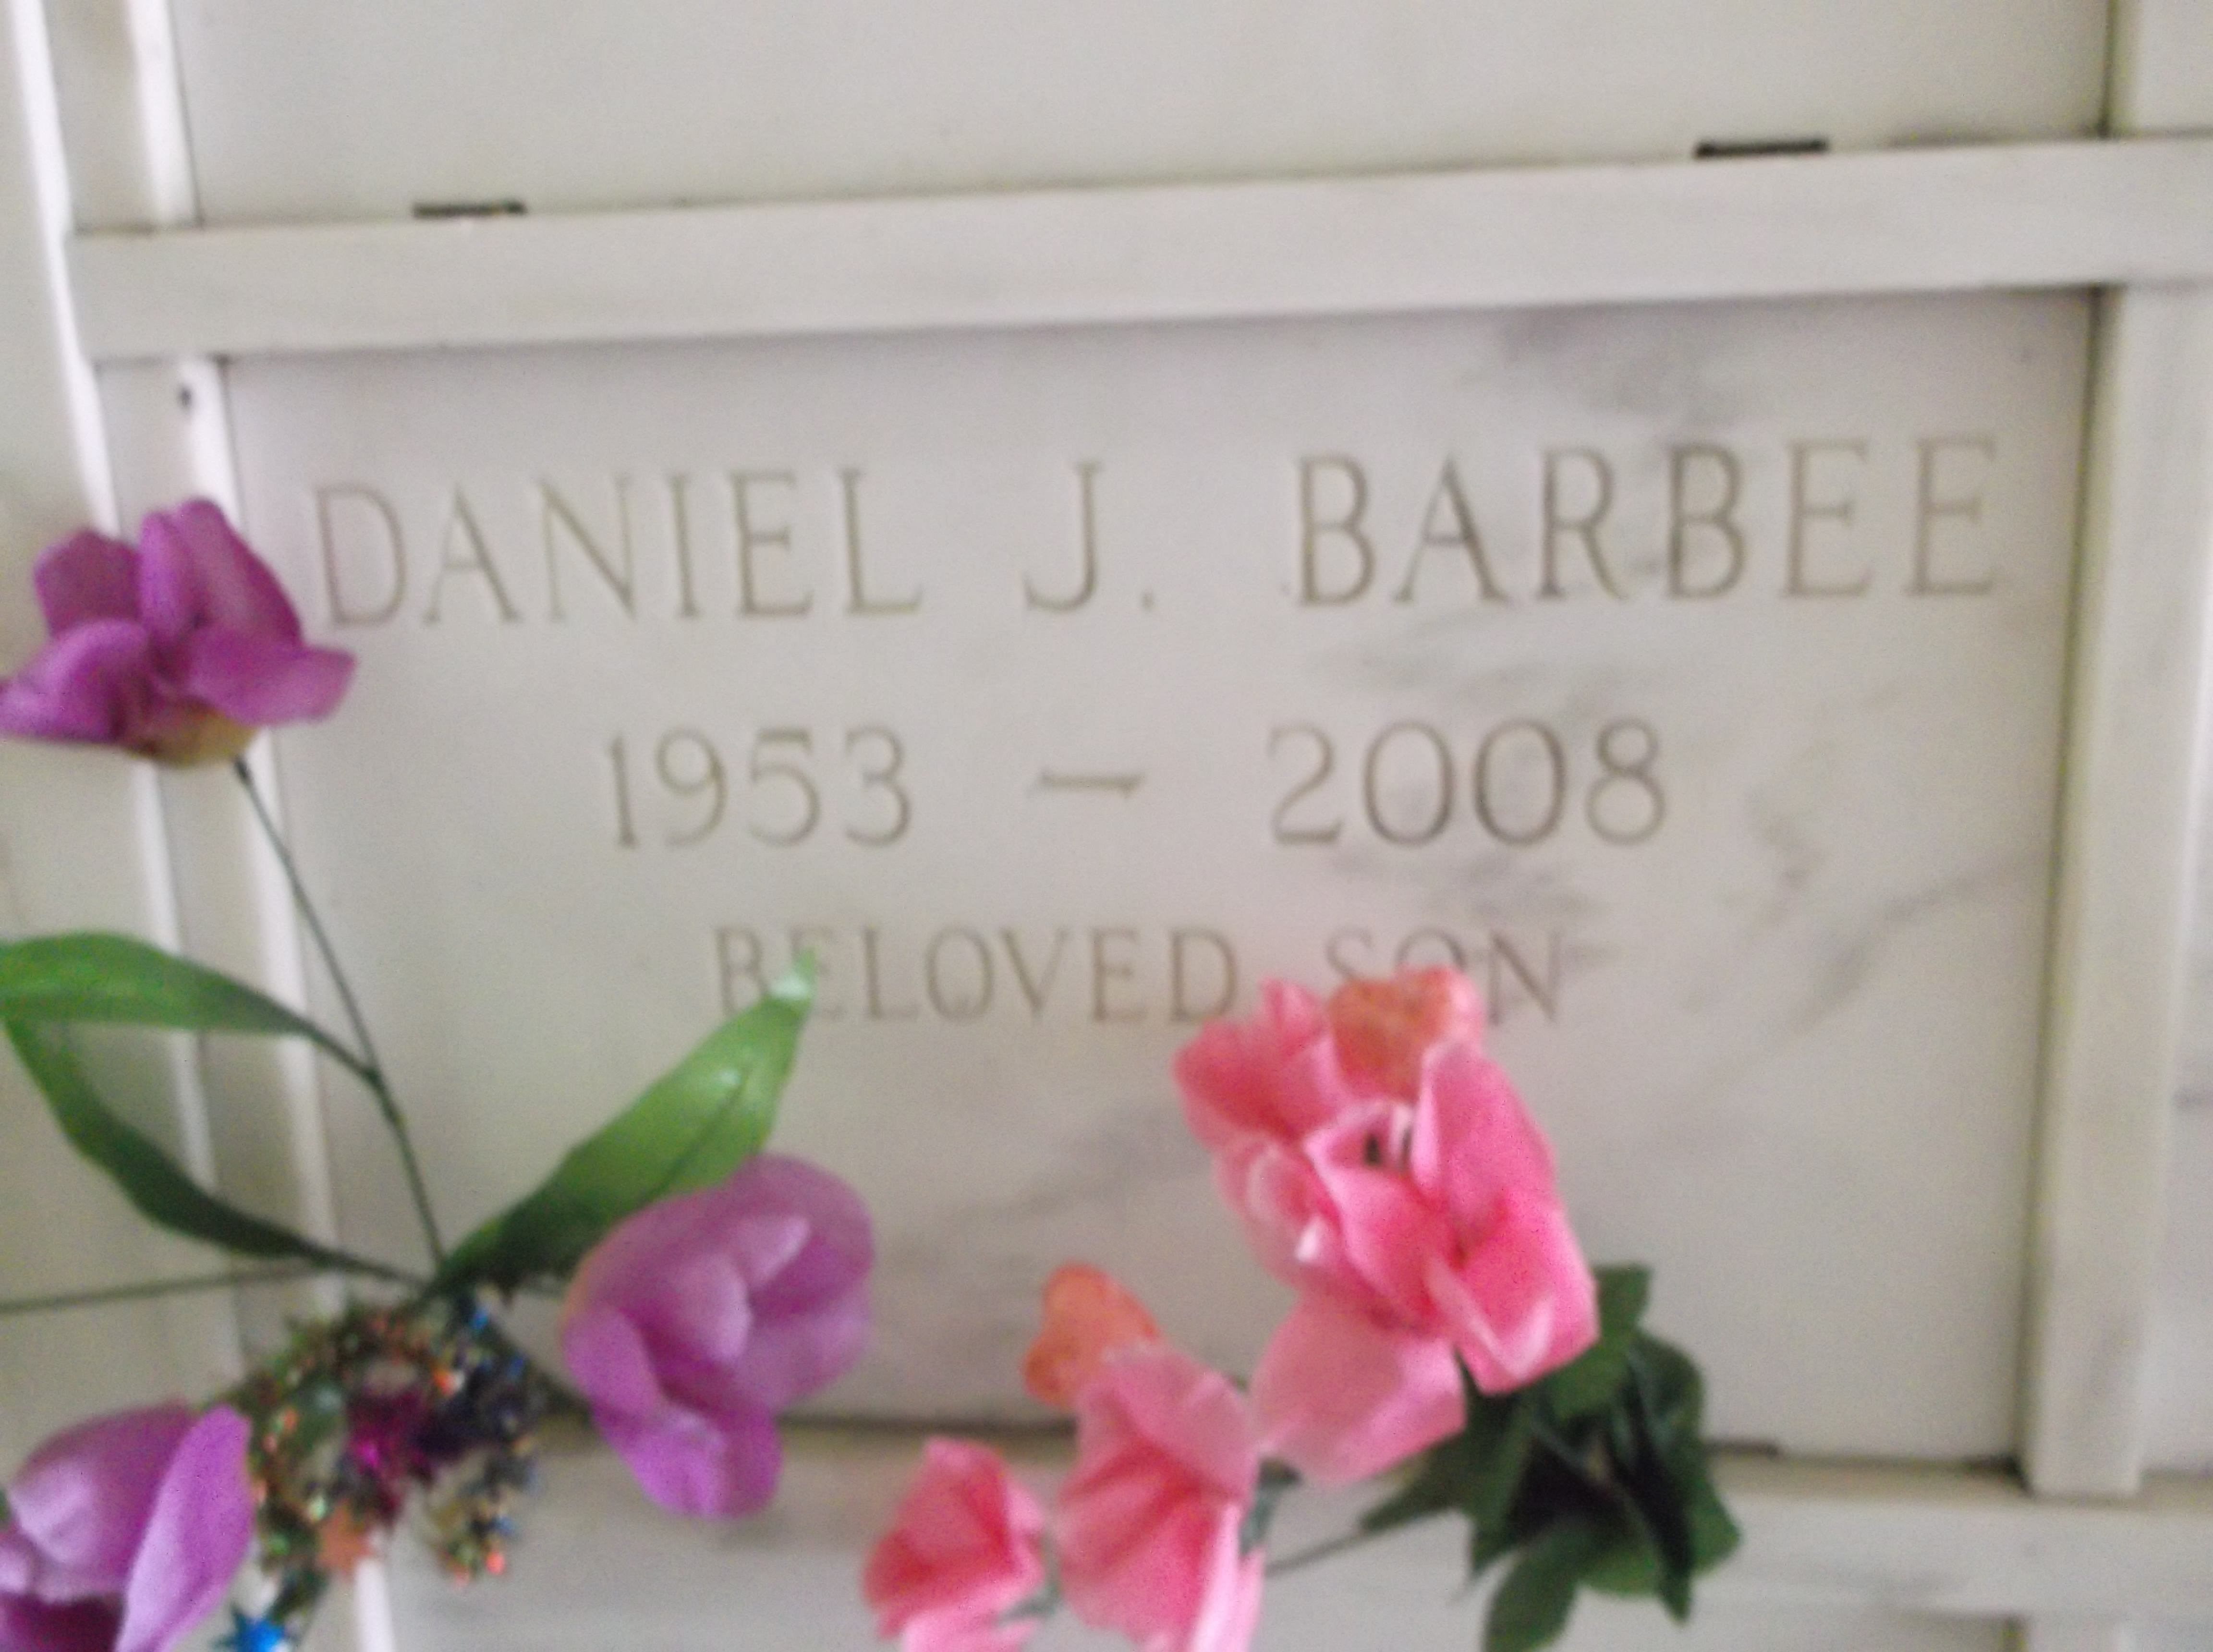 Daniel J Barbee